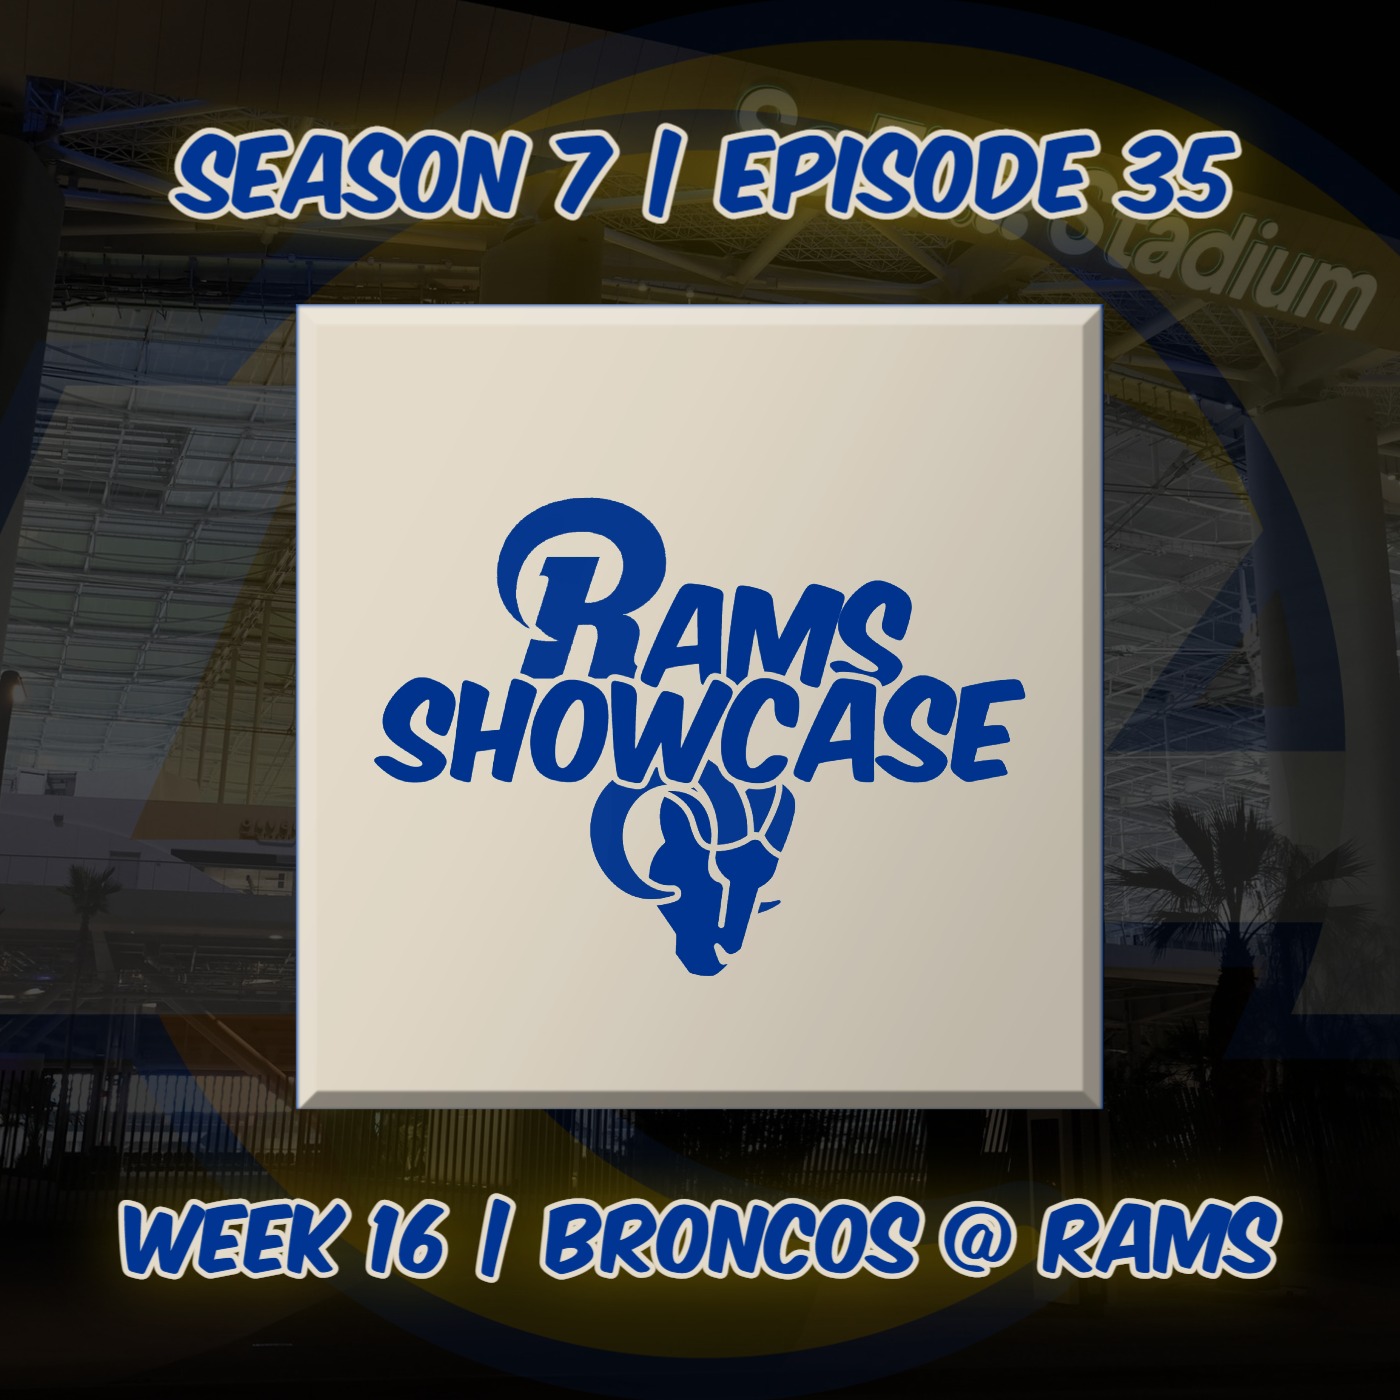 Rams Showcase | Week 16 - Broncos @ Rams | FULL PODCAST